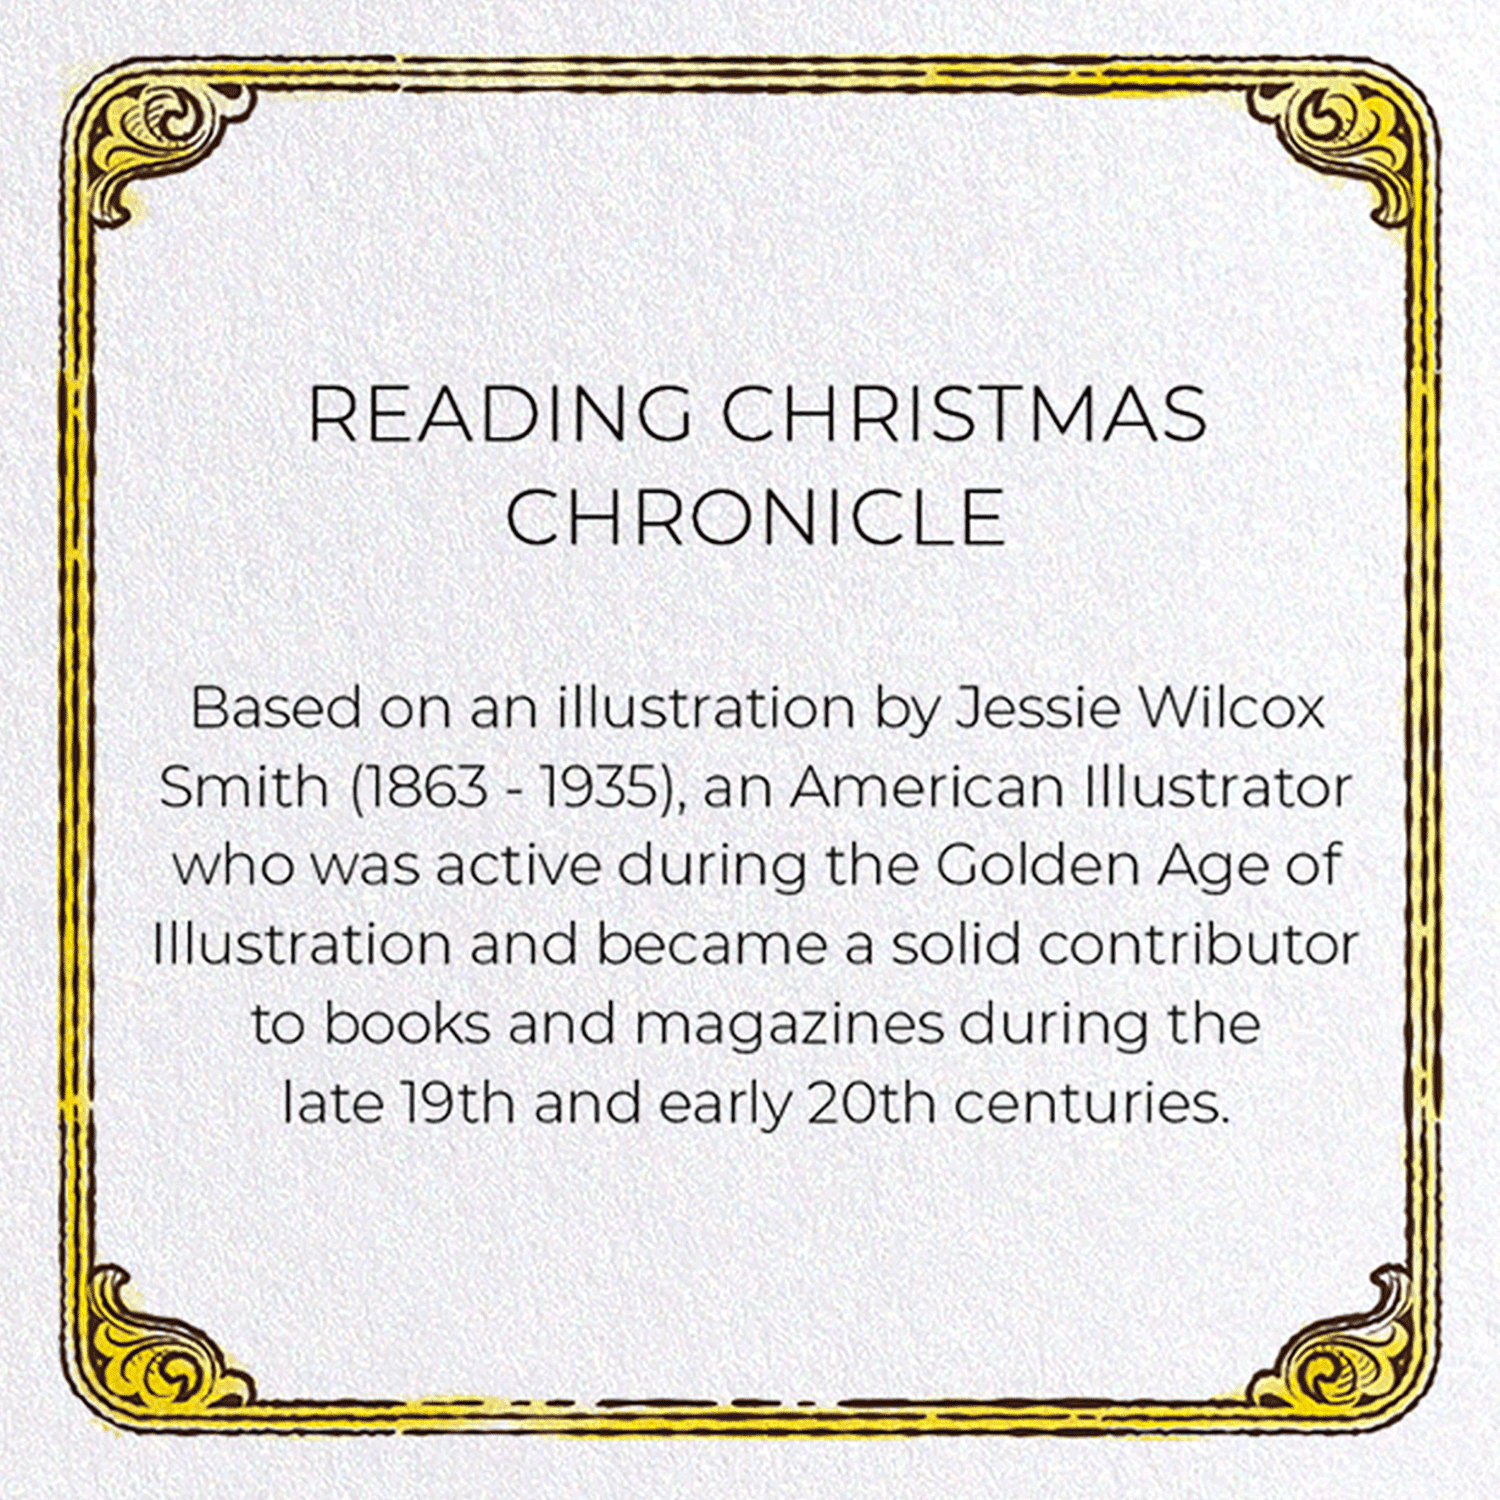 READING CHRISTMAS CHRONICLE